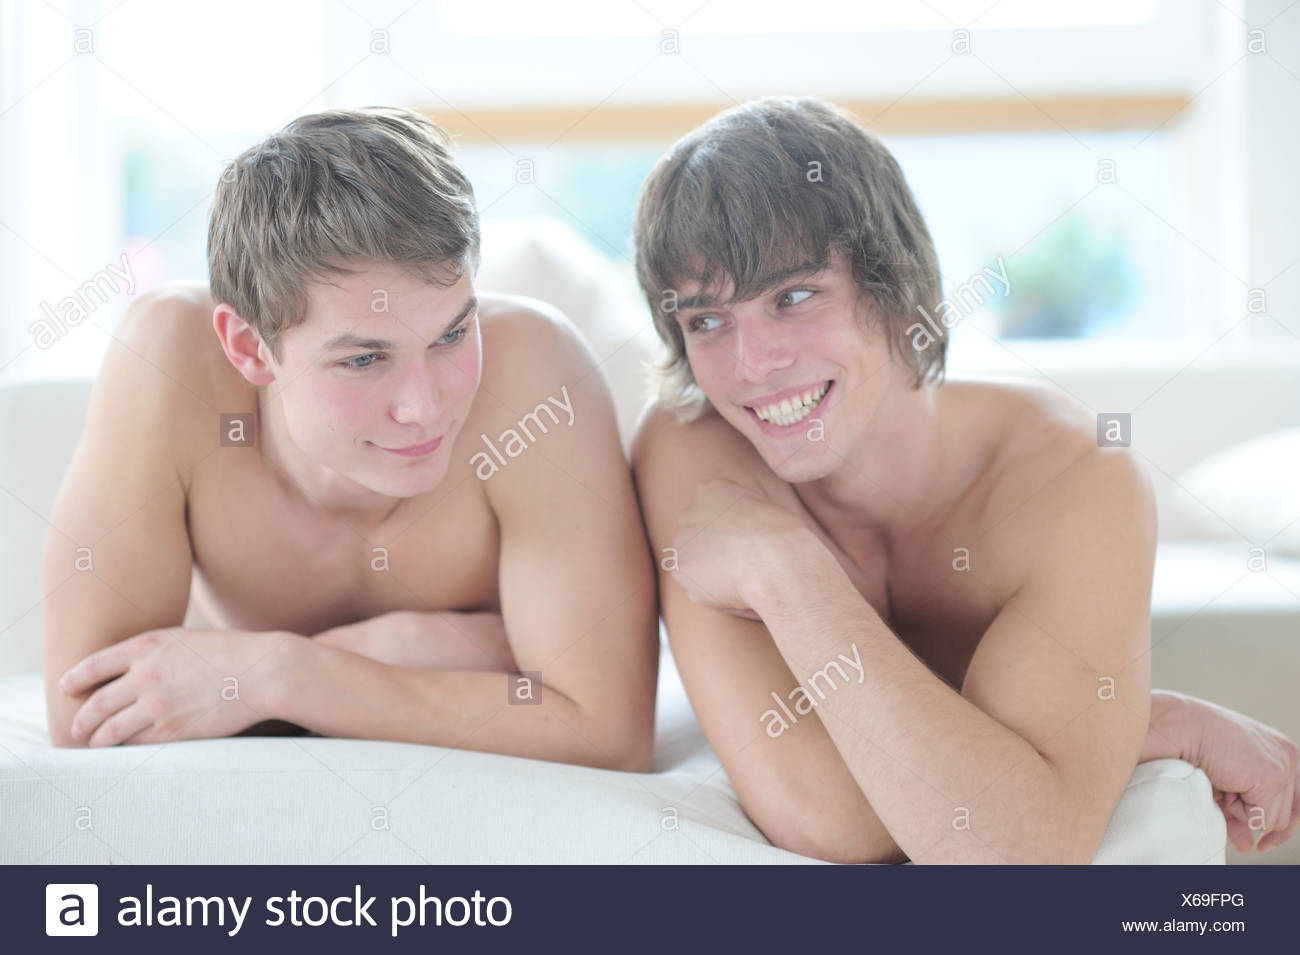 Teenage free gay porn